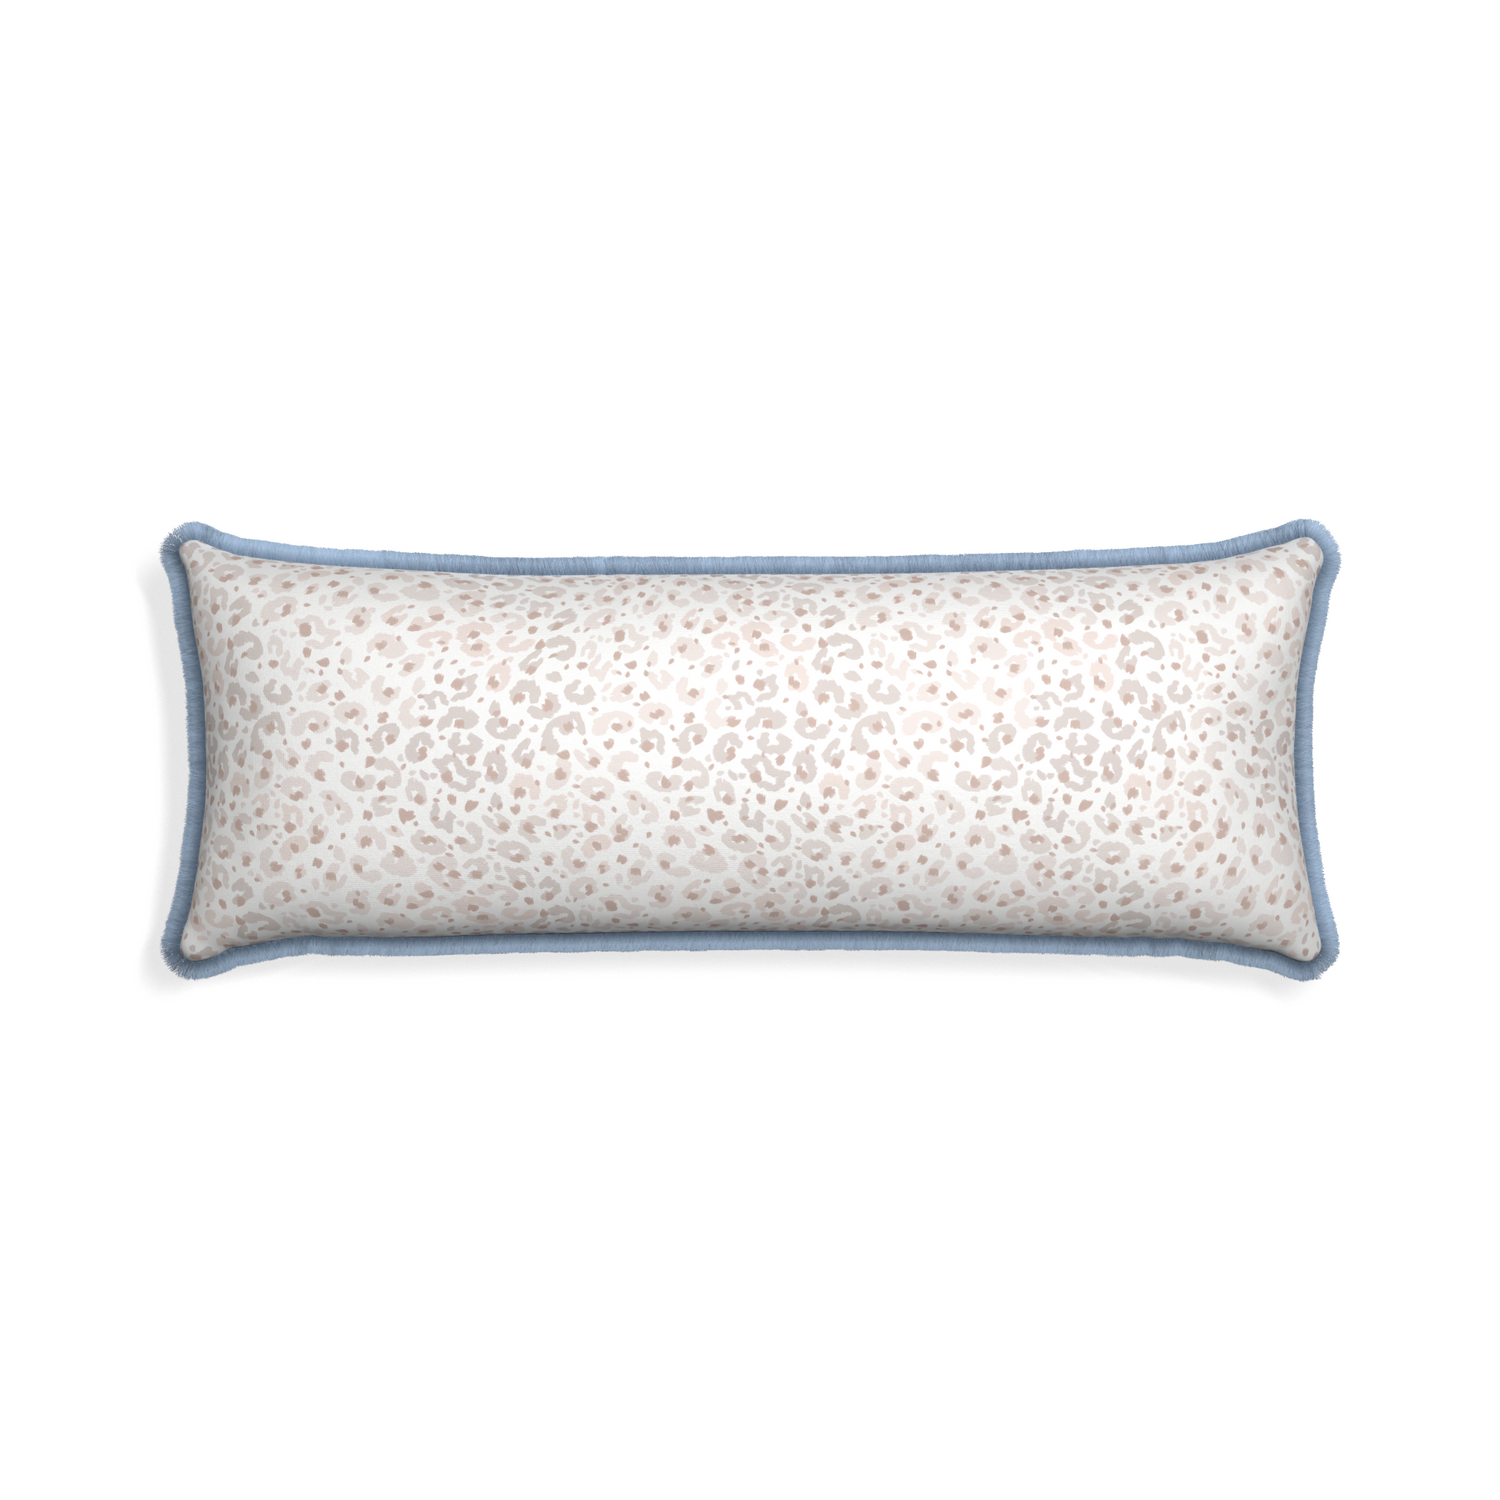 Xl-lumbar rosie custom pillow with sky fringe on white background